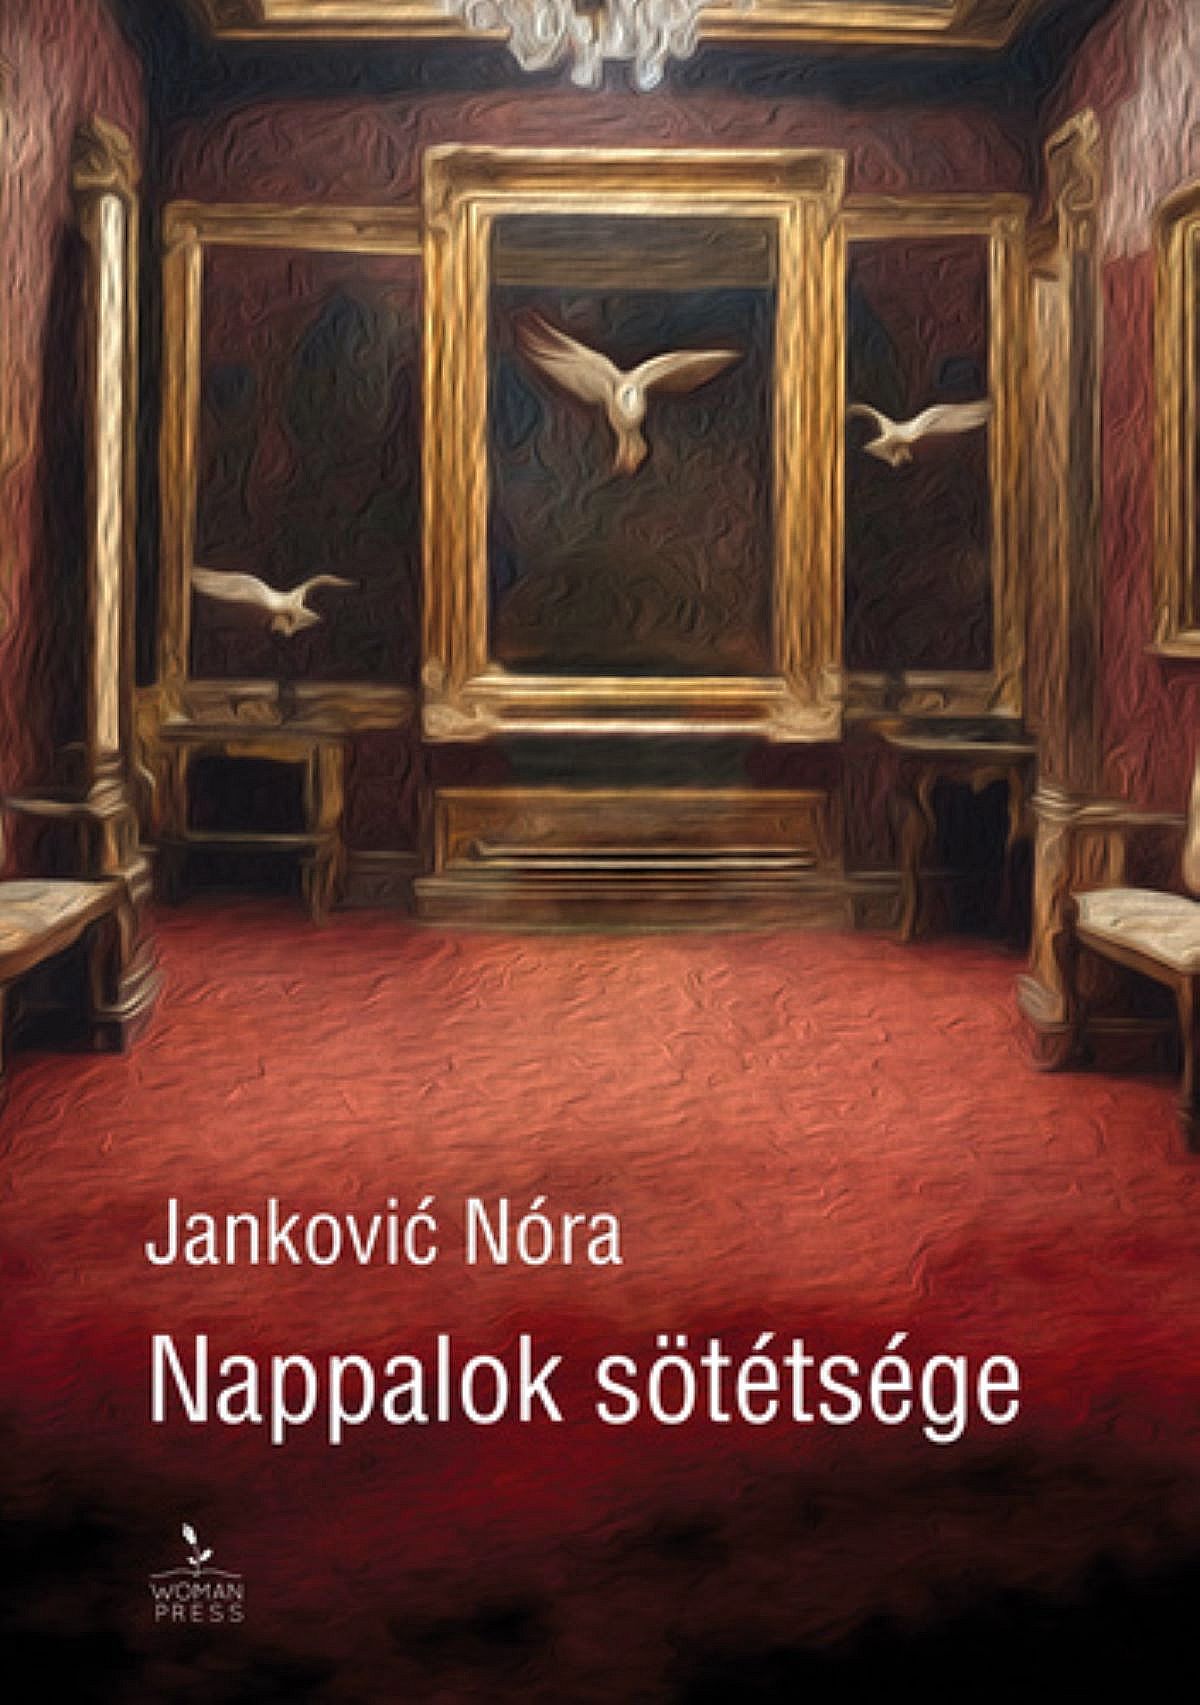 Janković Nóra